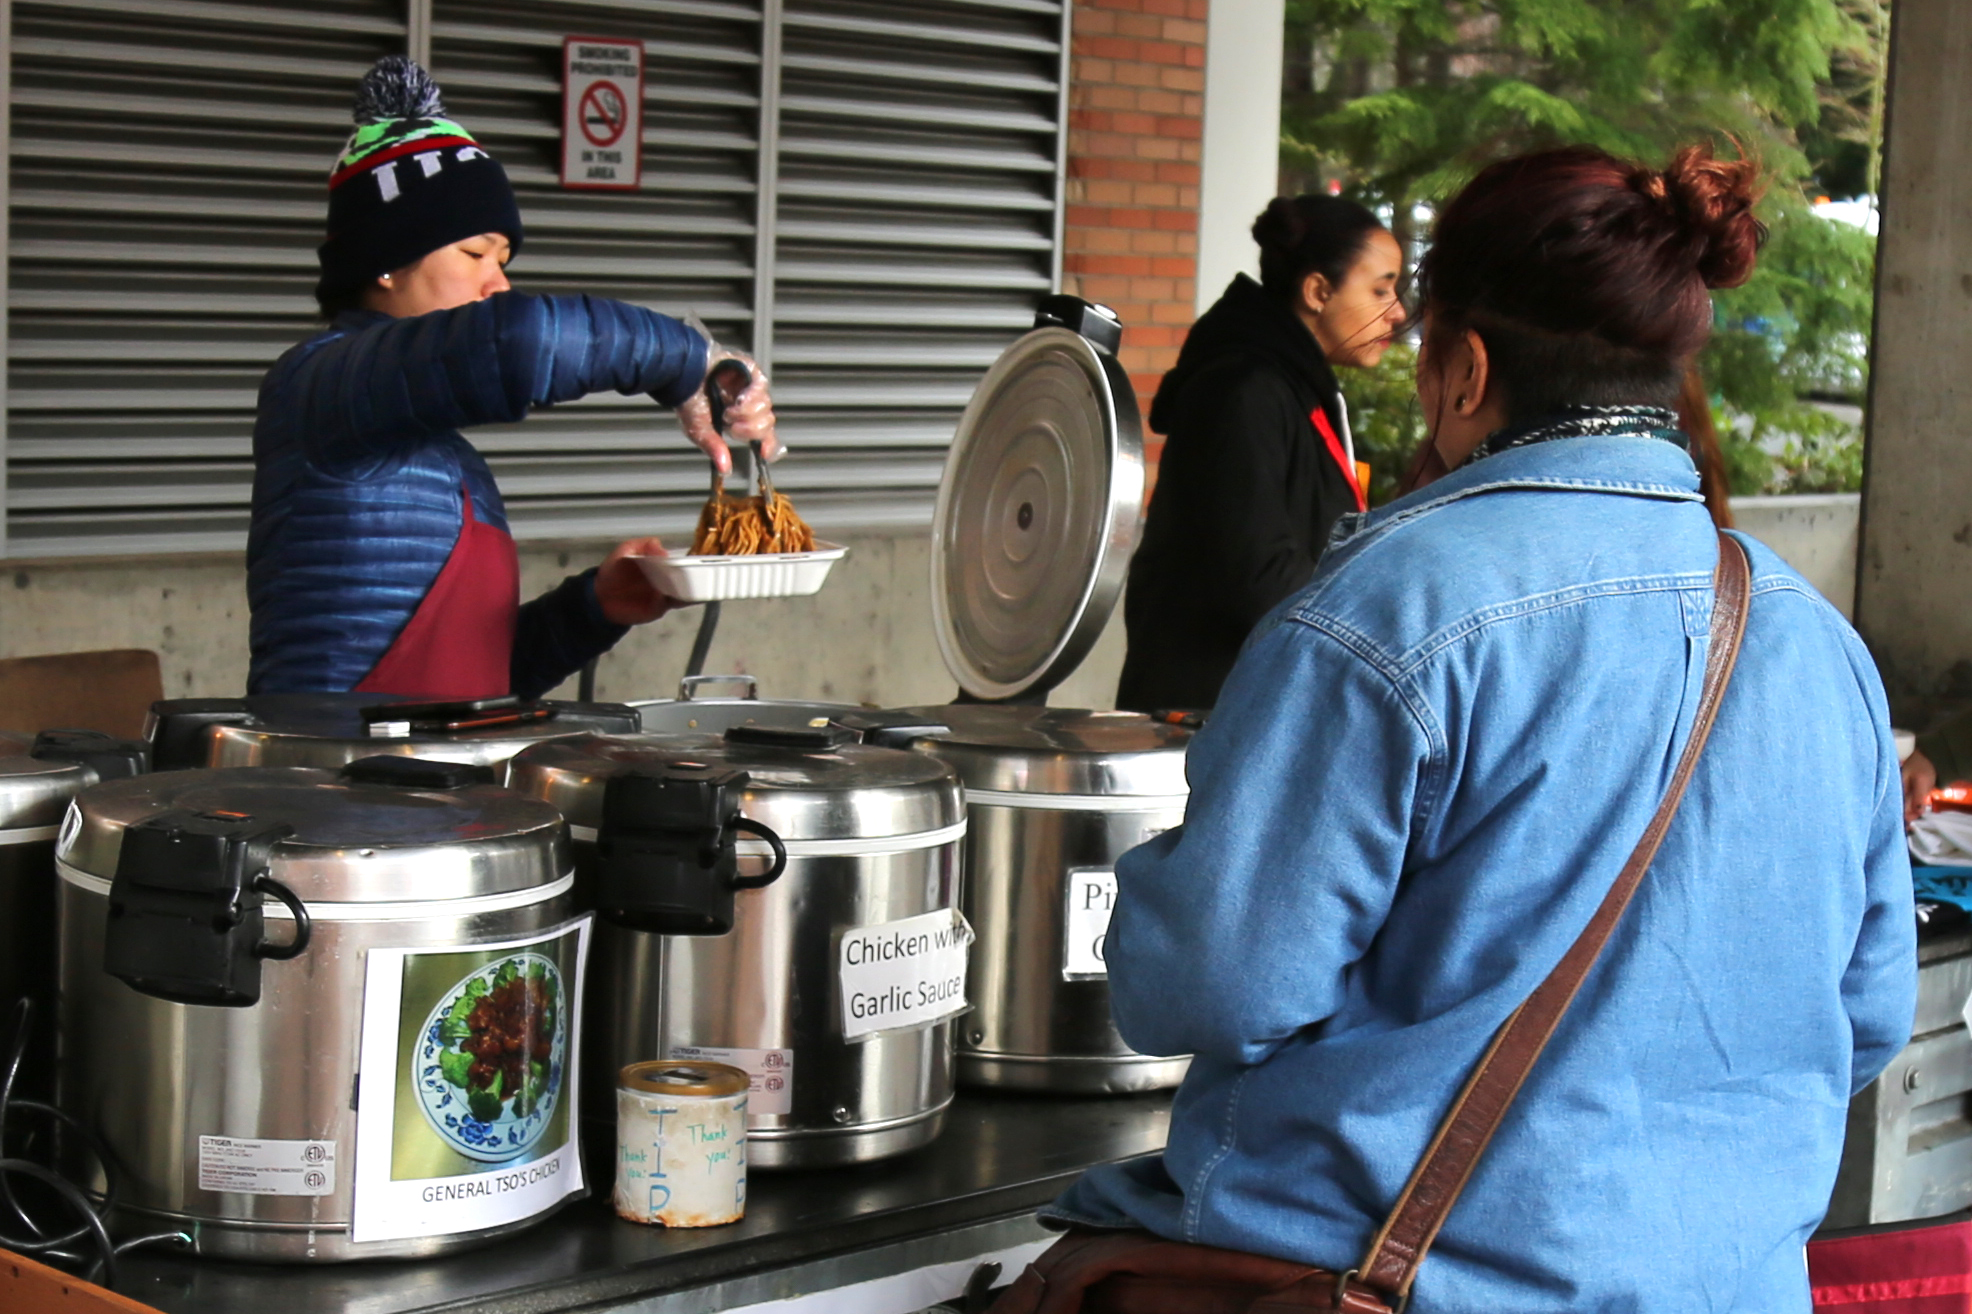 A vendor serves a student noodles outside the Viking Union.